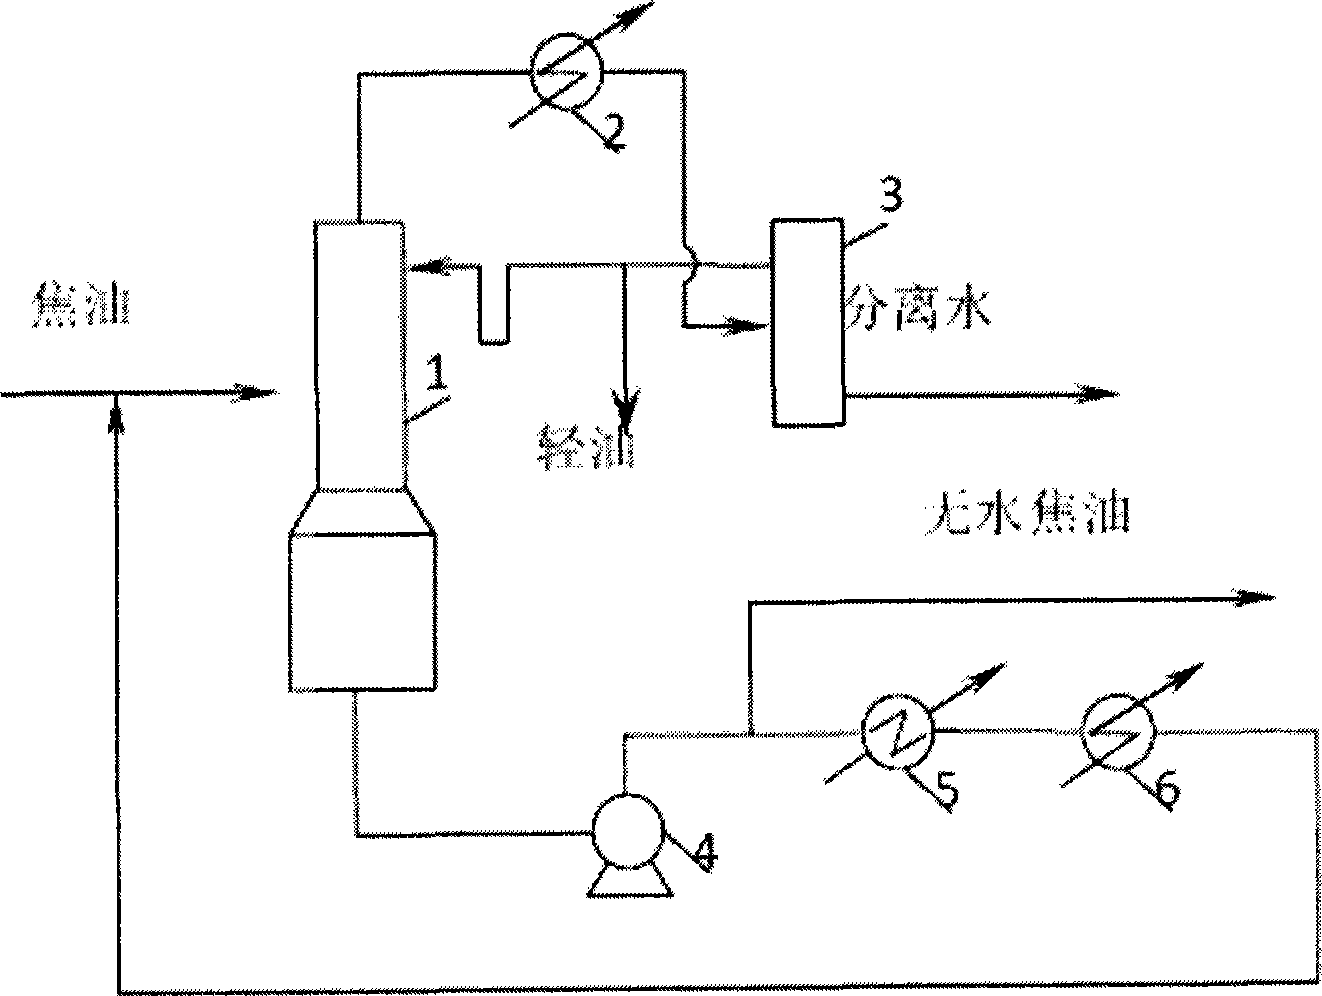 Coal tar coupled rotational flow purification method and apparatus